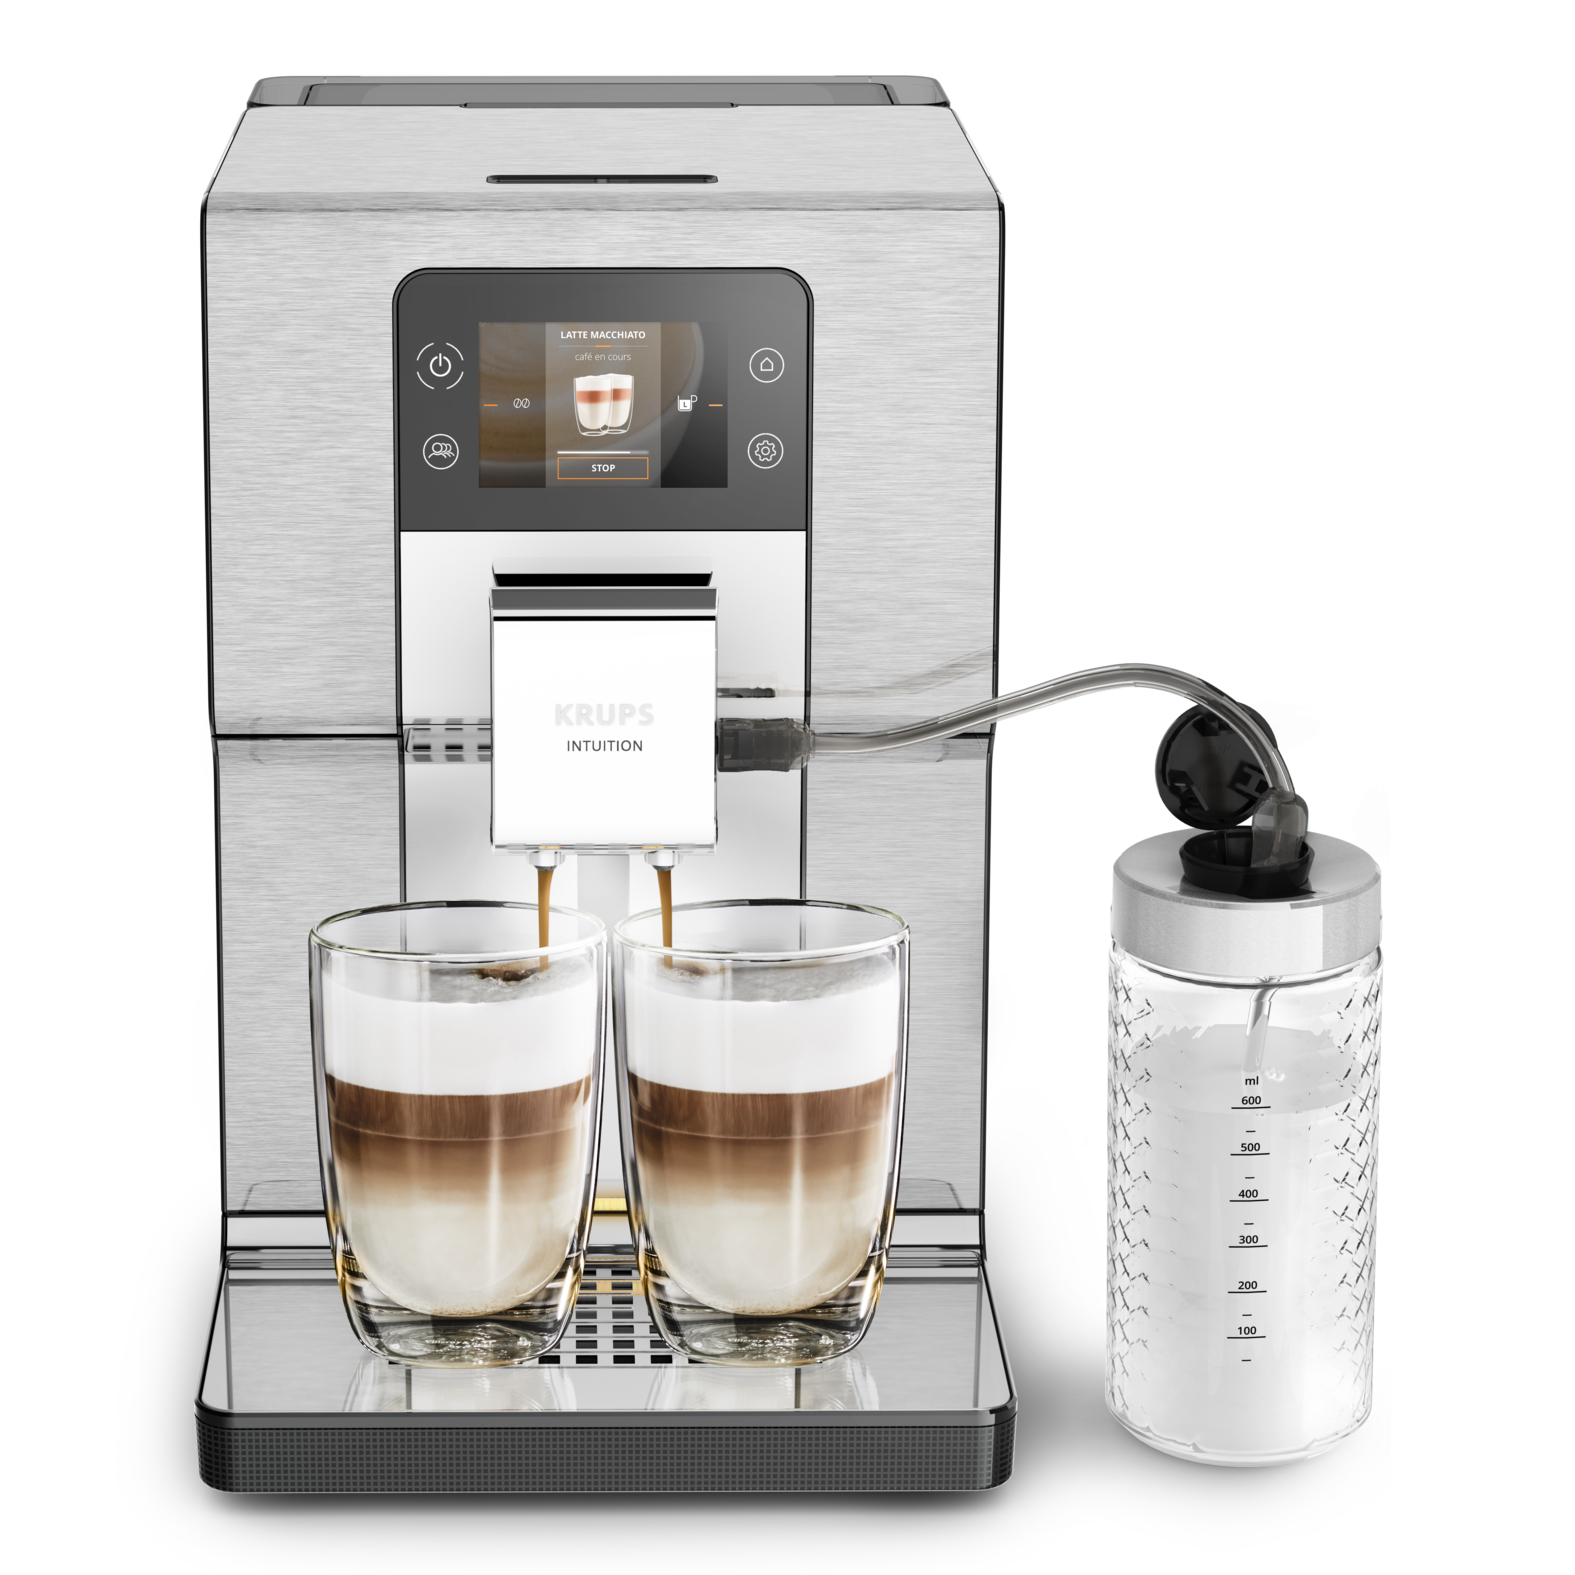 Автоматическая кофемашина Intuition Experience + EA877D10 кофемашина автоматическая melitta caffeo varianza csp stainless f 580 101 f 580 100